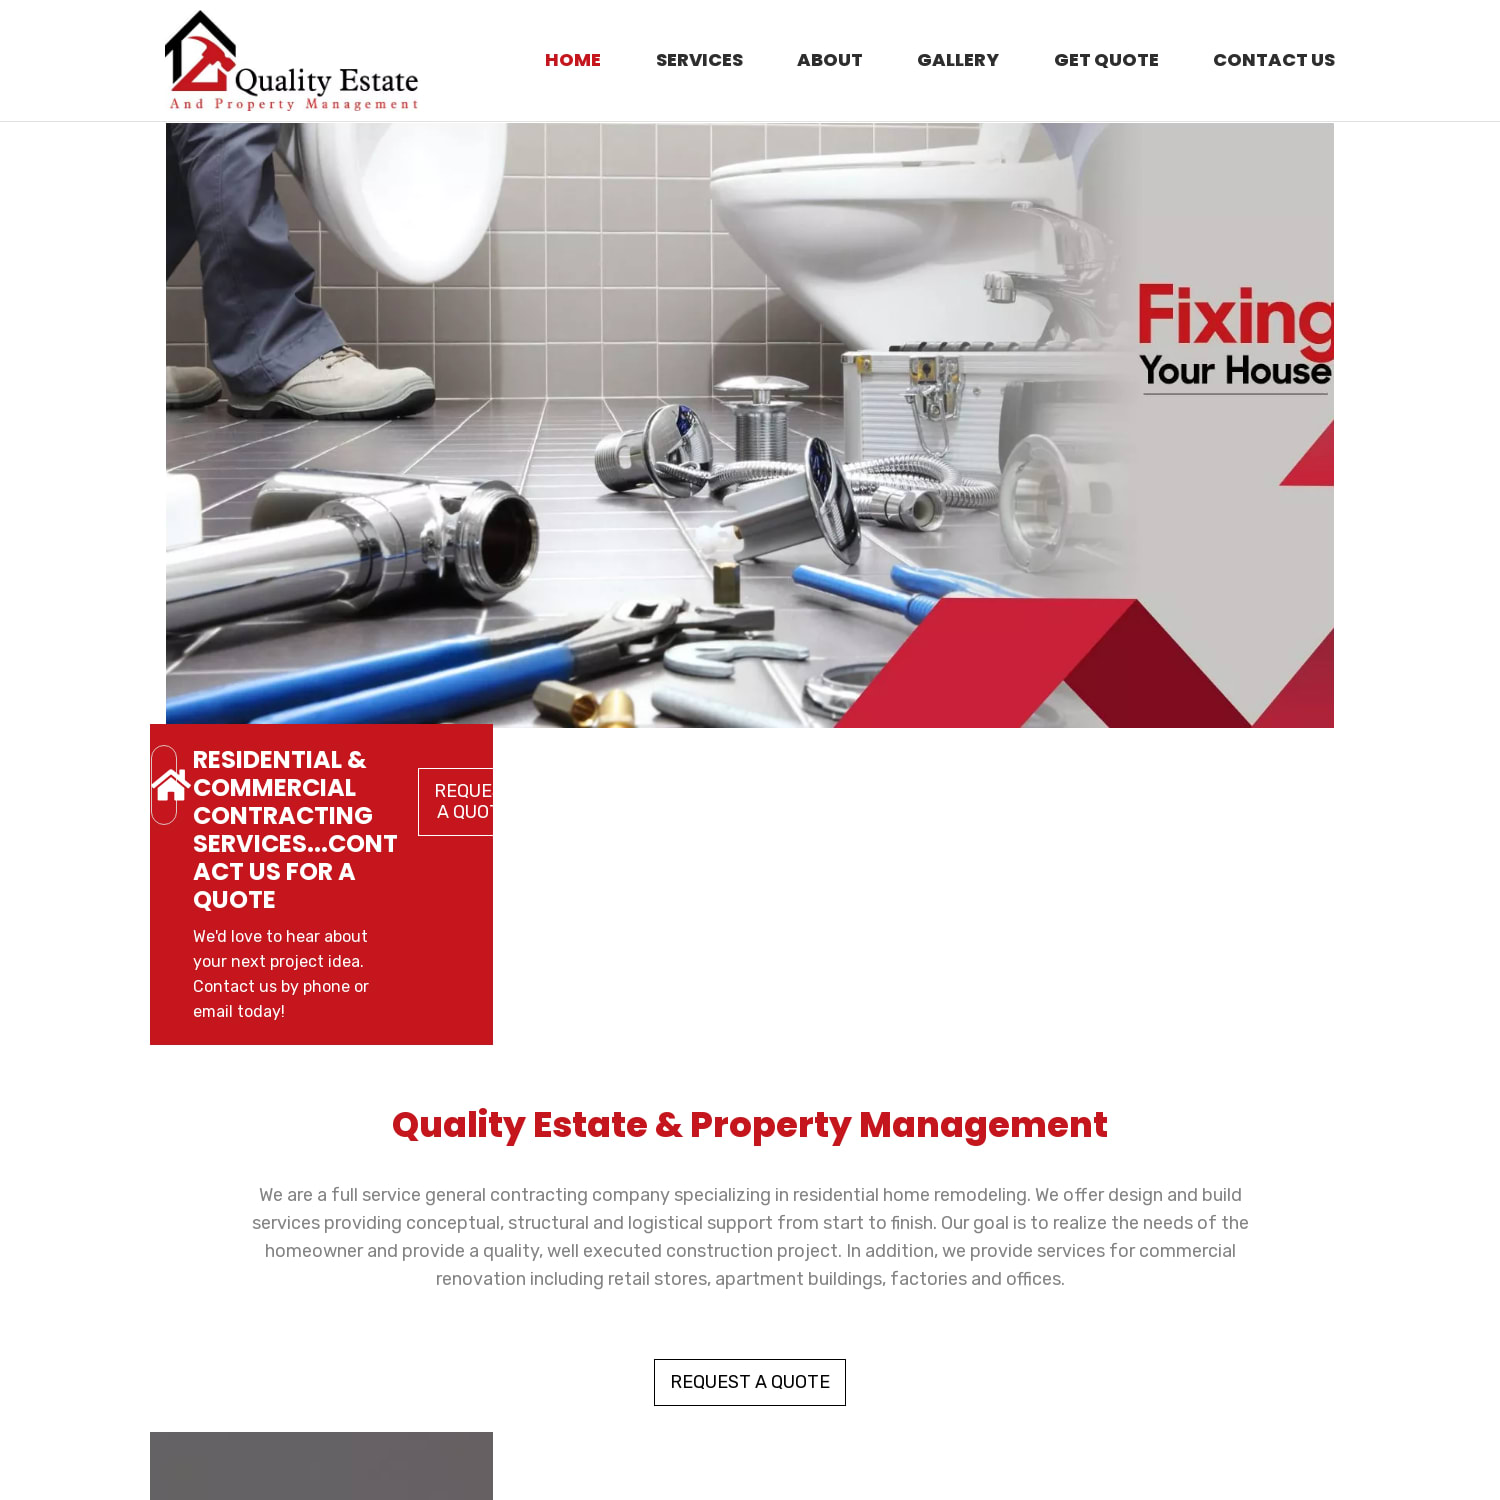 Property Management Services - Quality Estate & Property Management